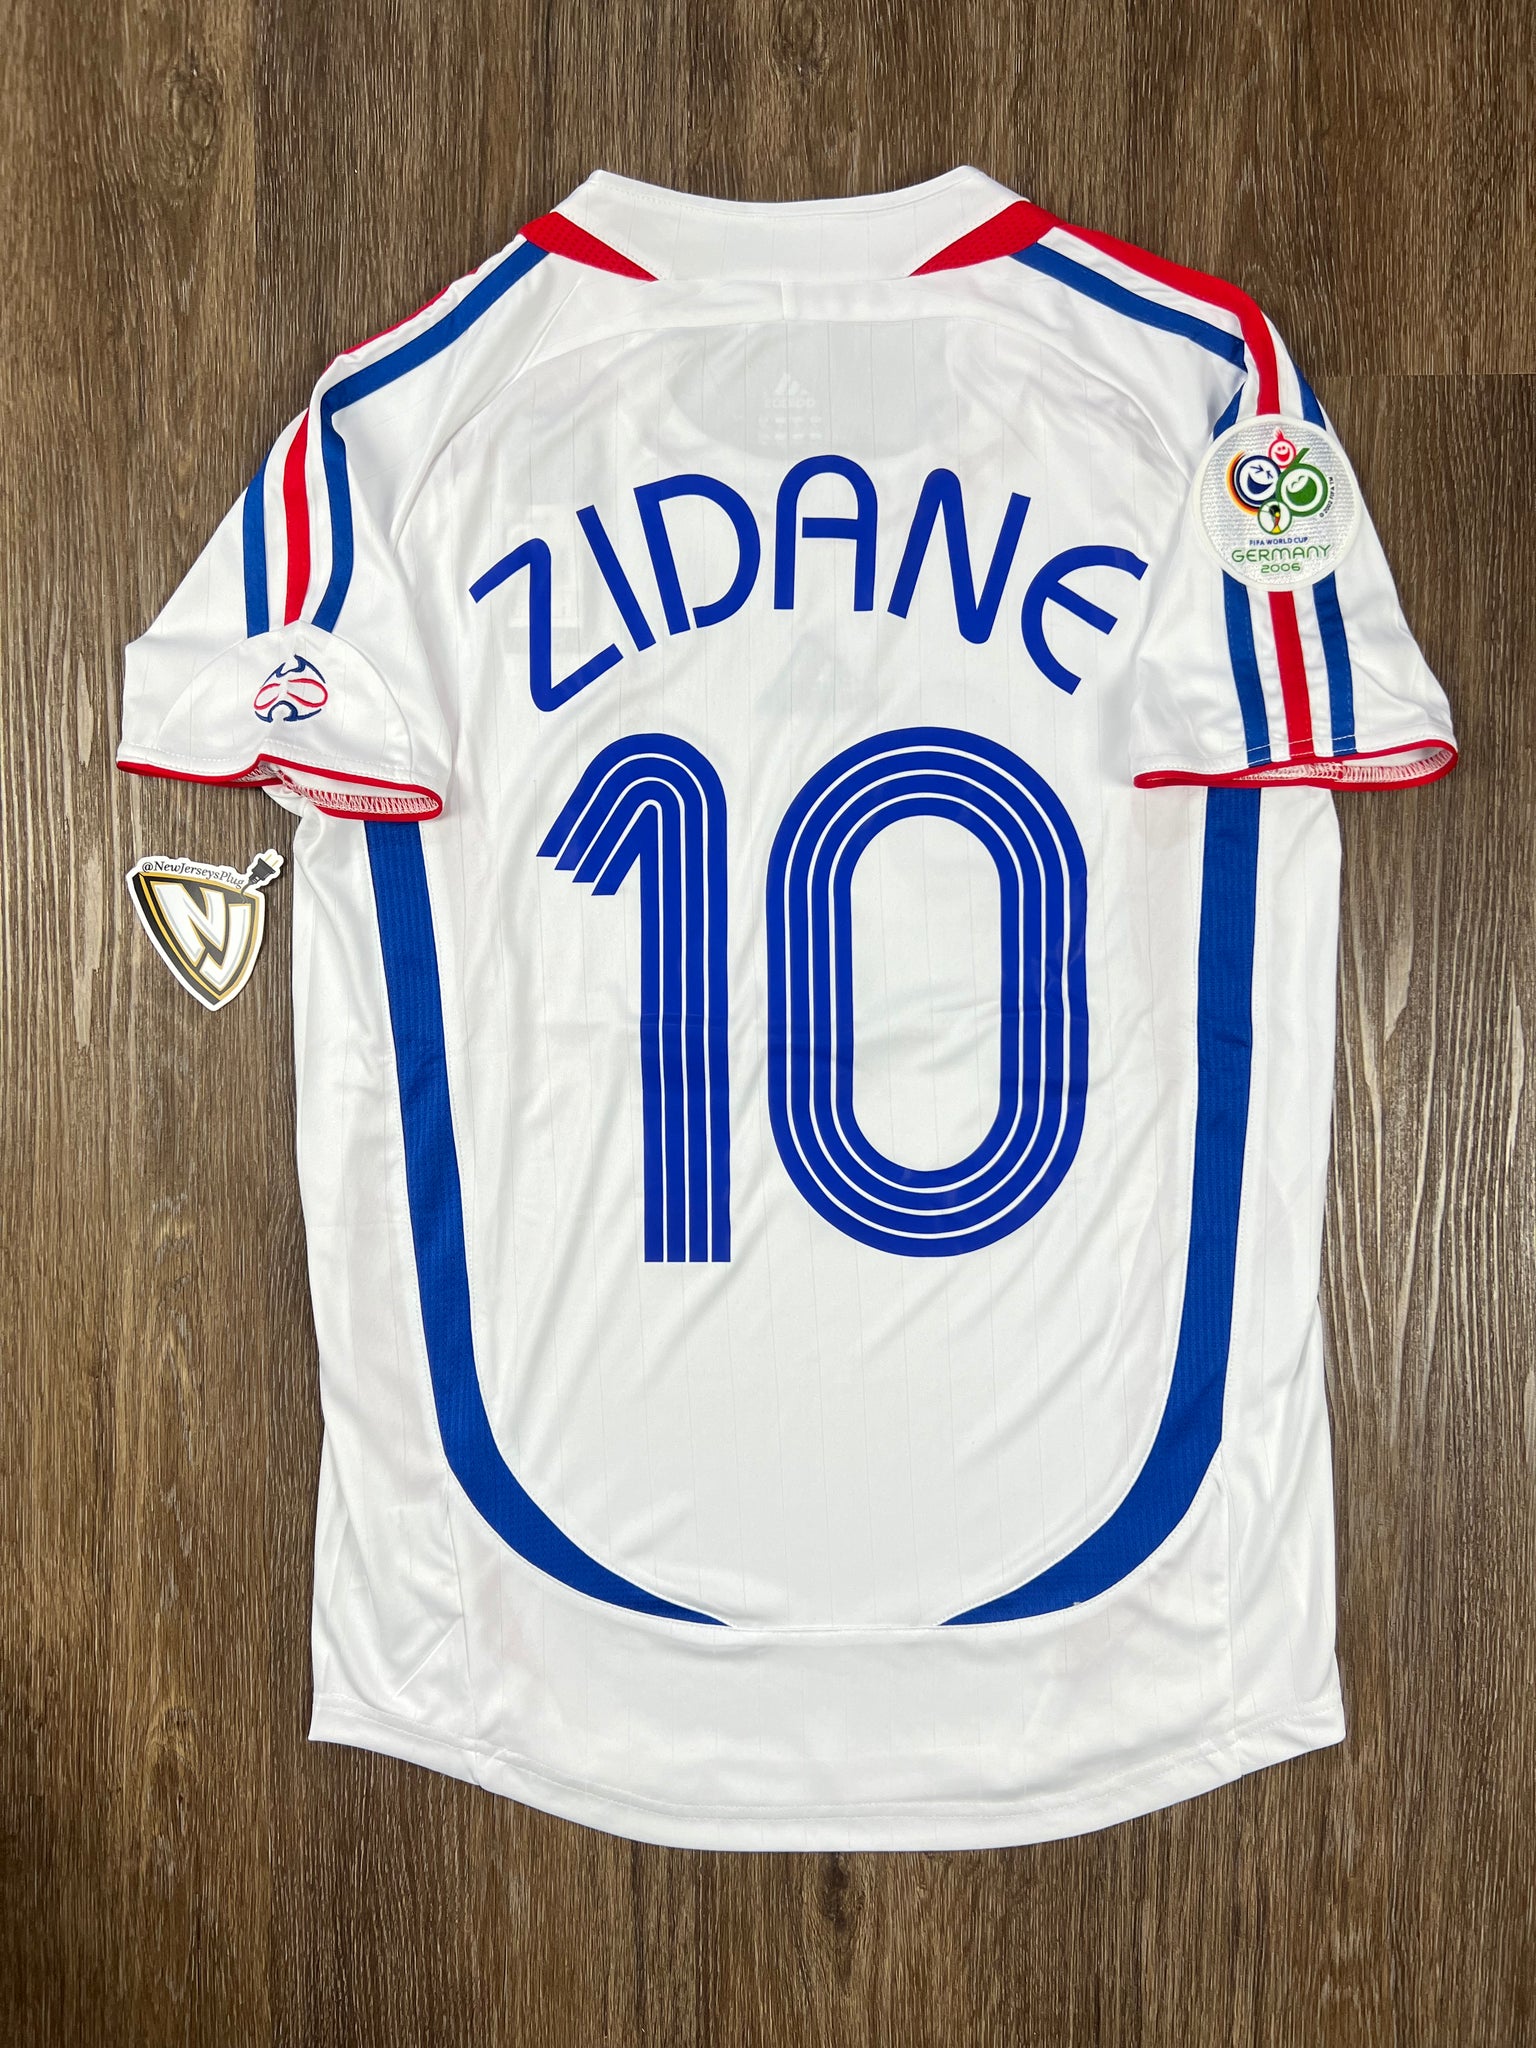 2006 France Zinedine Zidane 10 World Cup Final Jersey